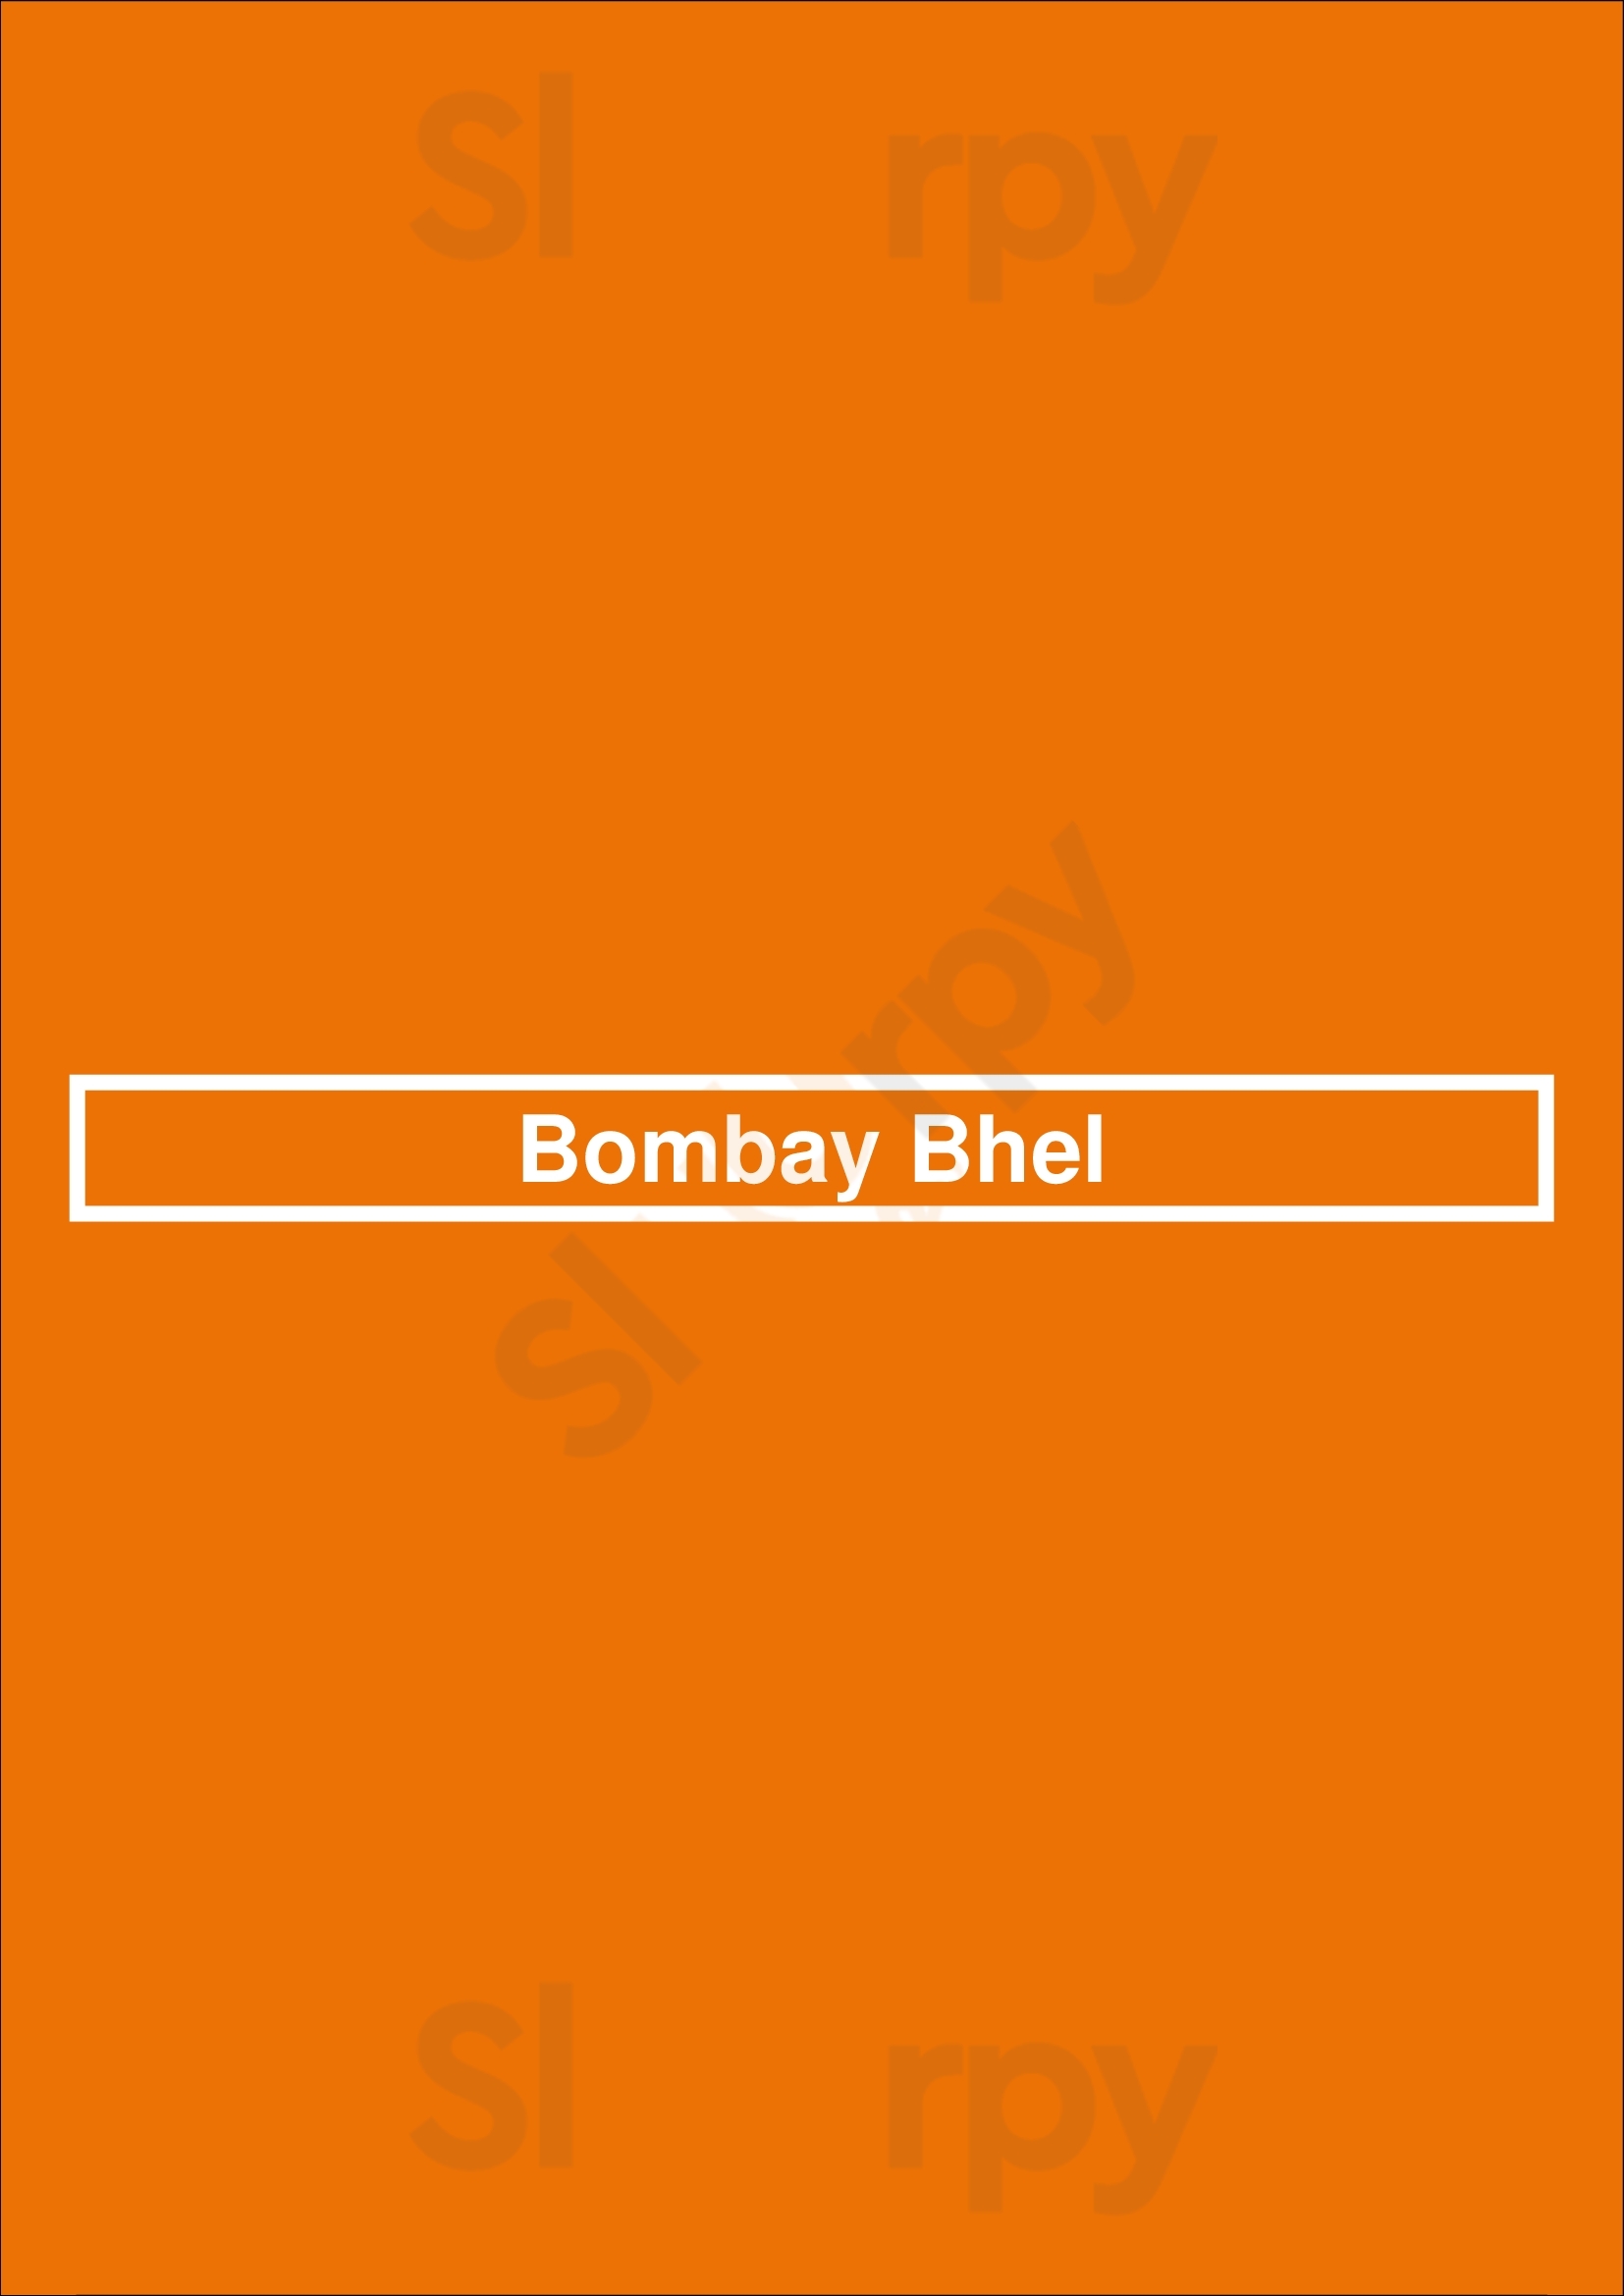 Bombay Bhel Kitchener Menu - 1